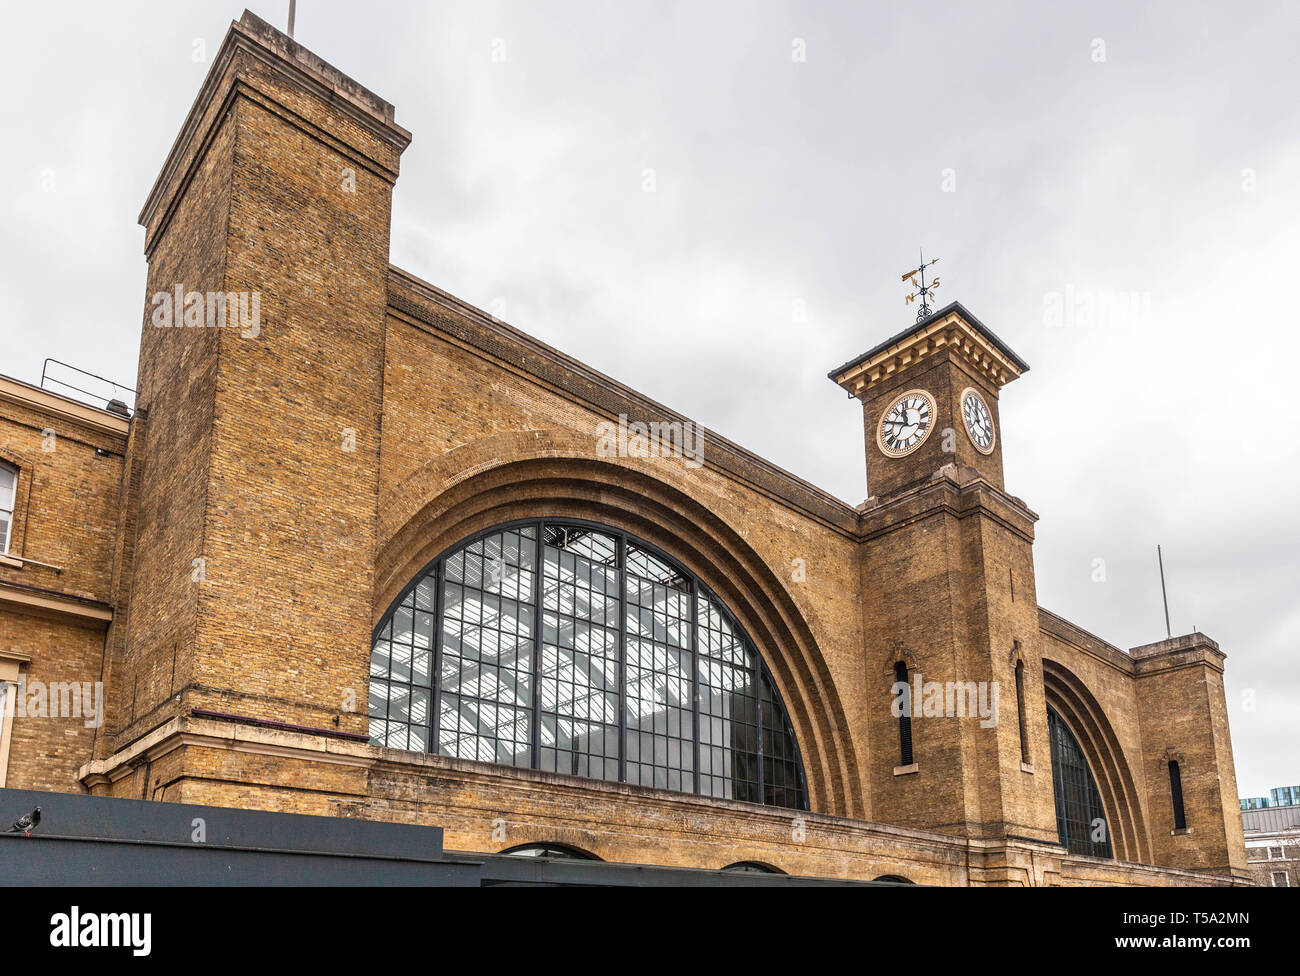 King's Cross Railway Station, Euston Road, London, England, UK. Stock Photo